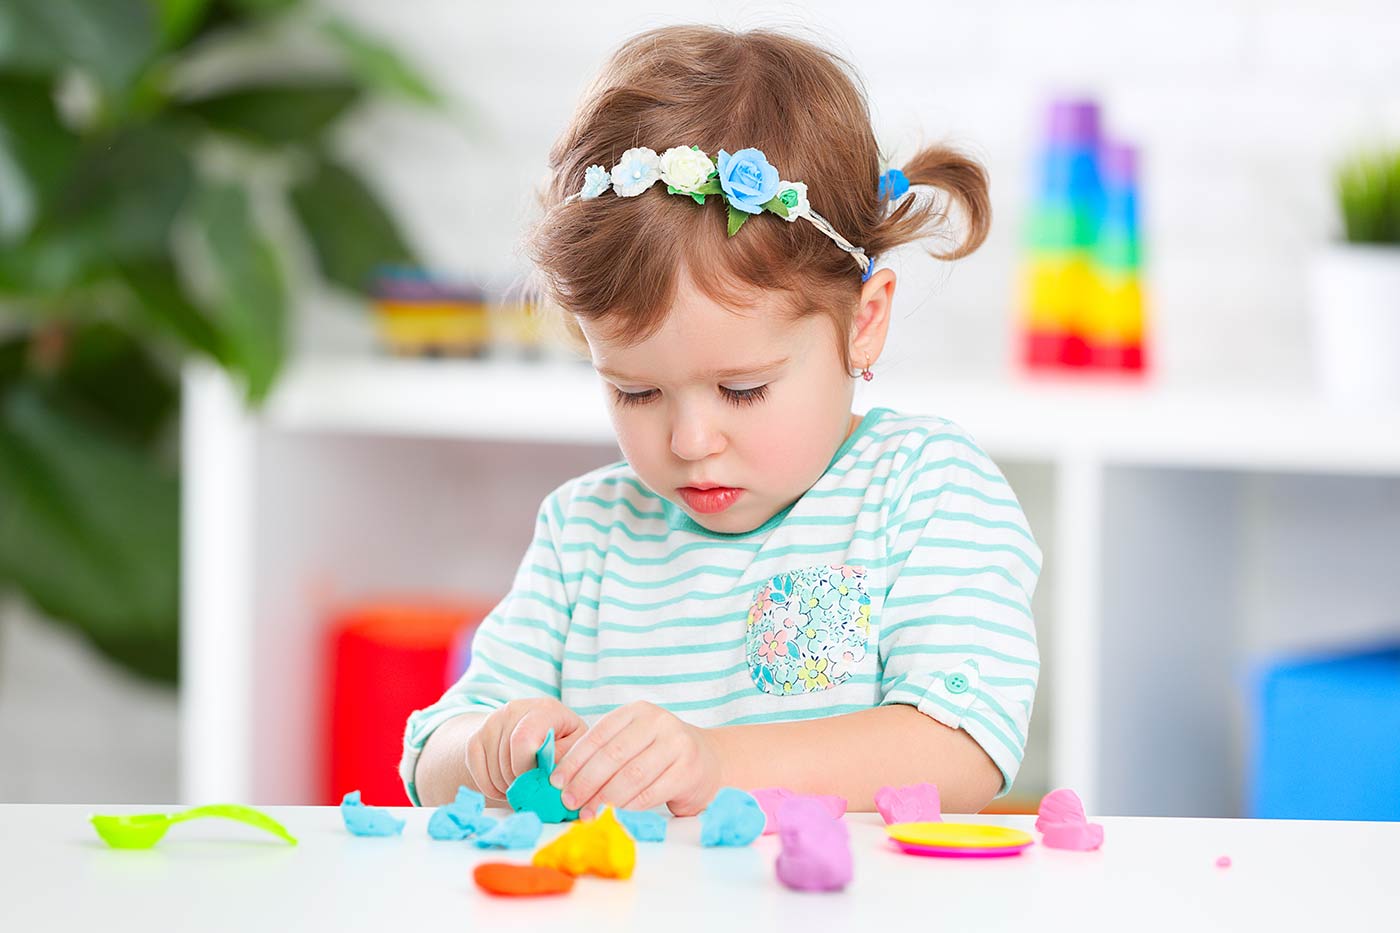 How to Help Your Child Adjust to Preschool